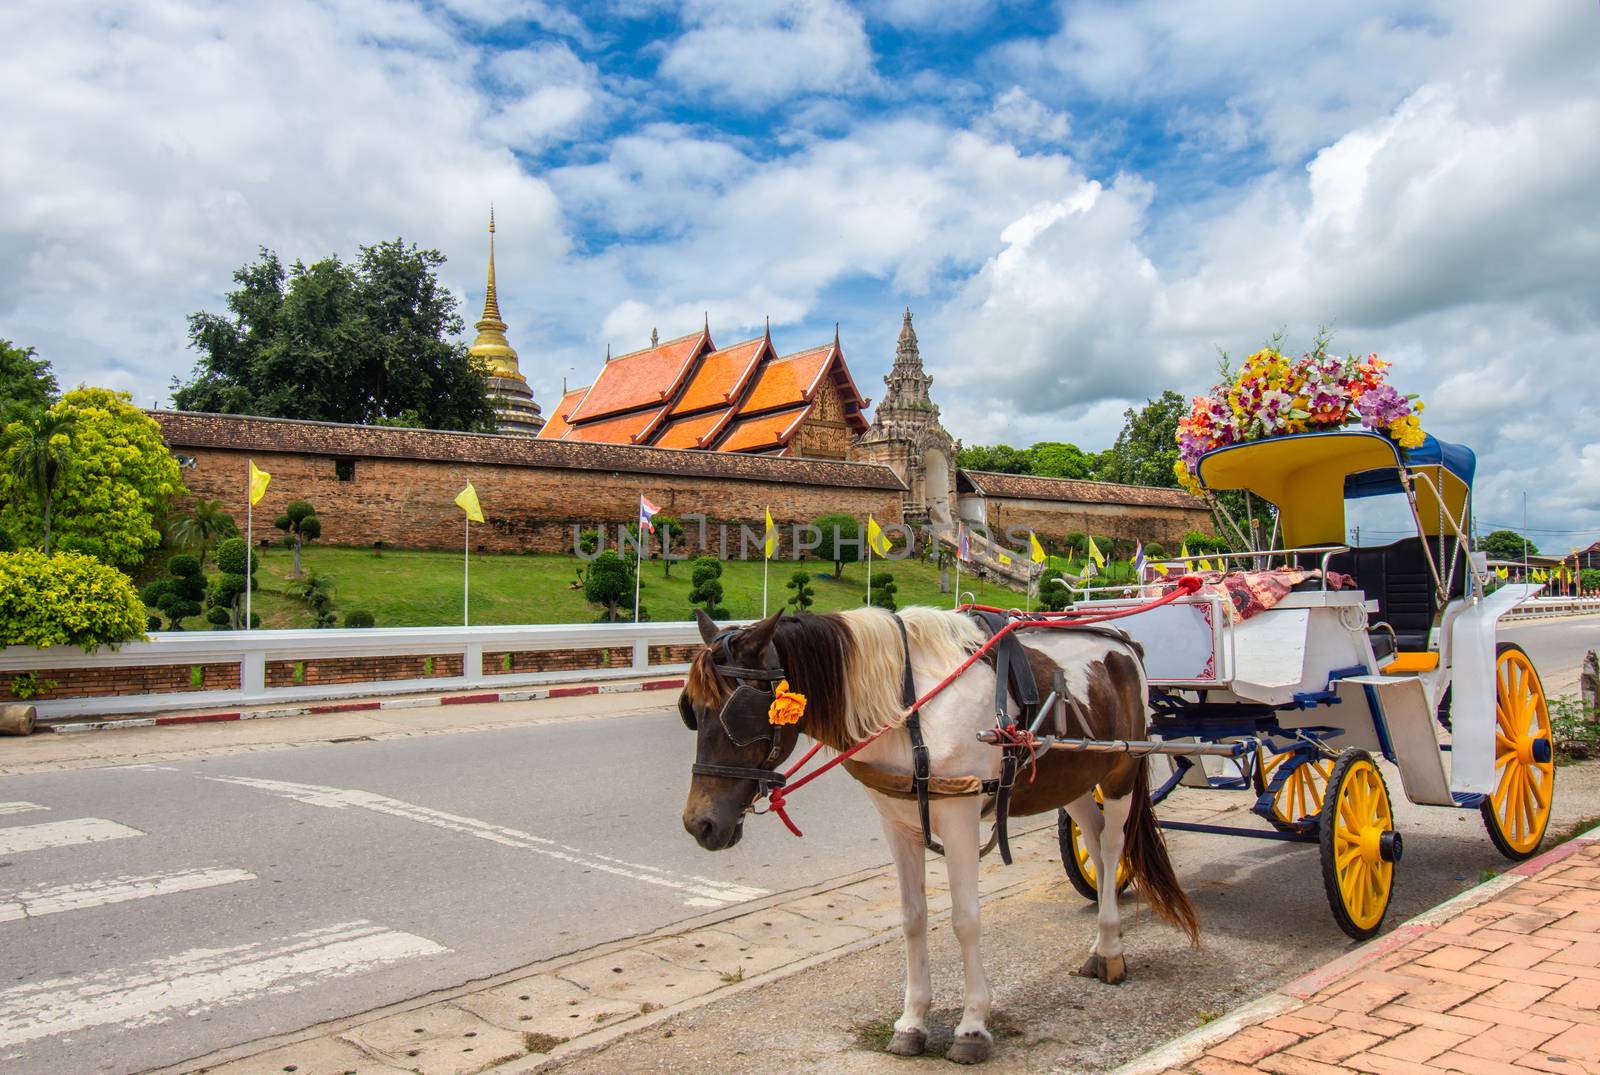 Horse drawn carriage in front of Wat Phra That, Lampang Luang by anuraksir